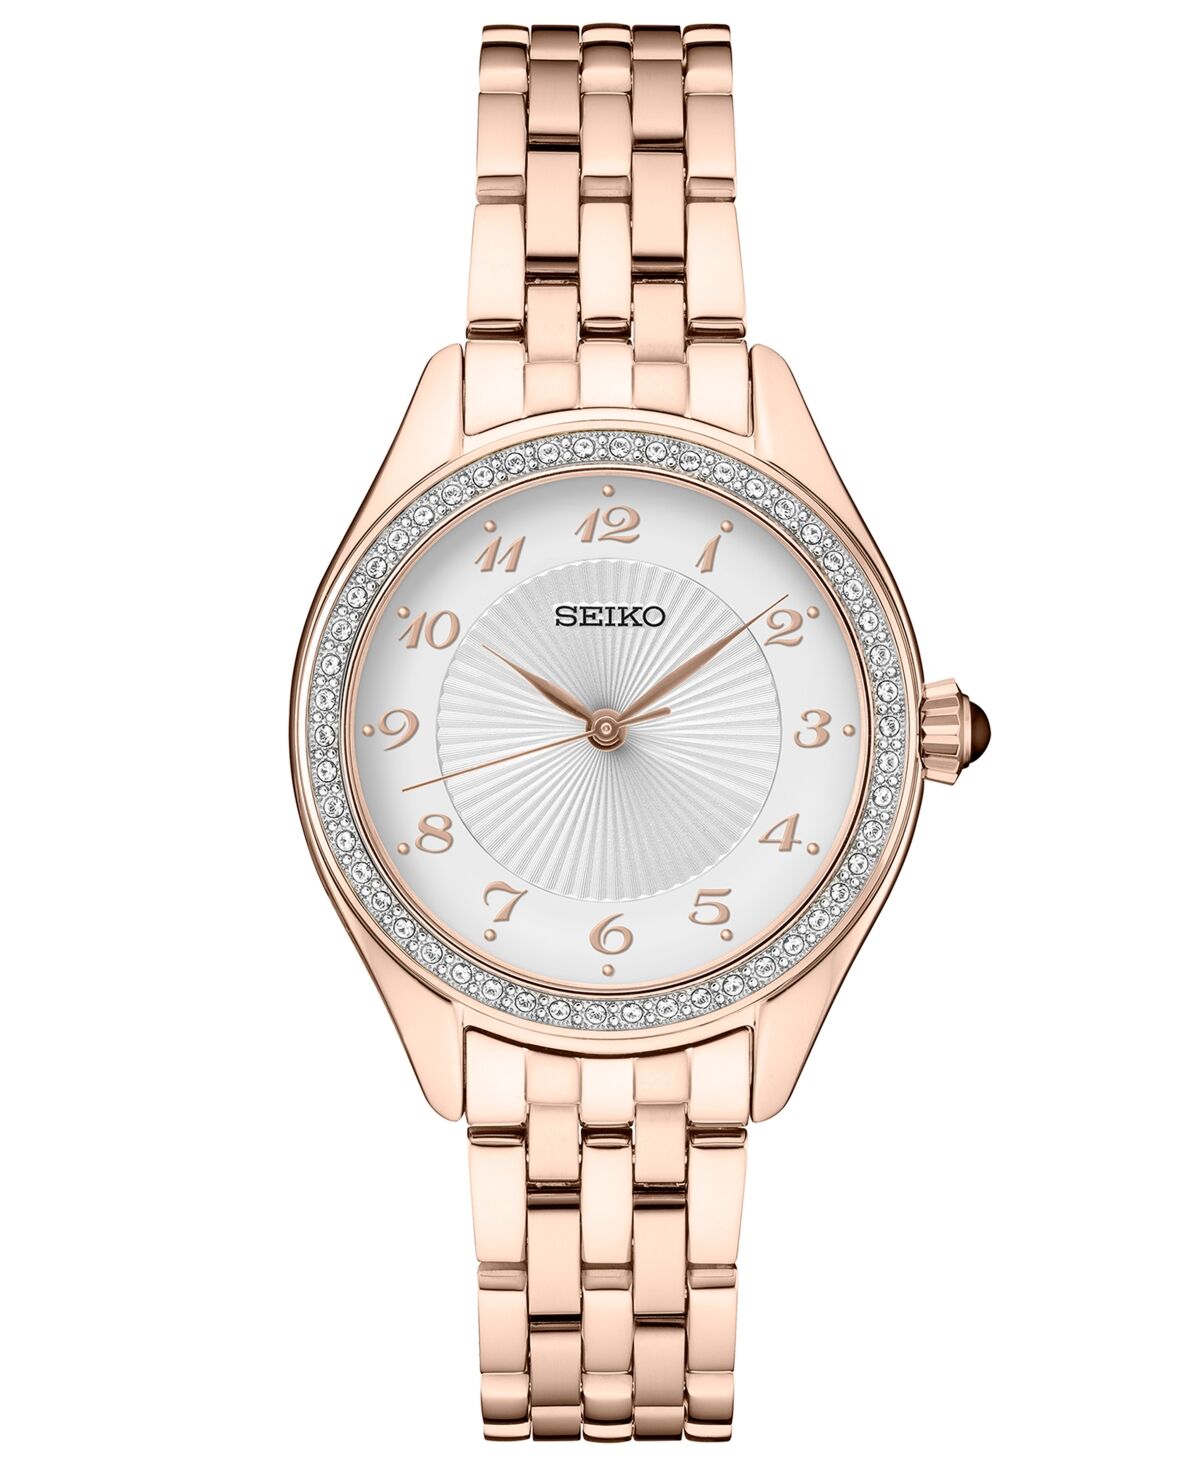 Seiko Women's Rose Gold-Tone Stainless Steel Bracelet Watch 29mm - Silver